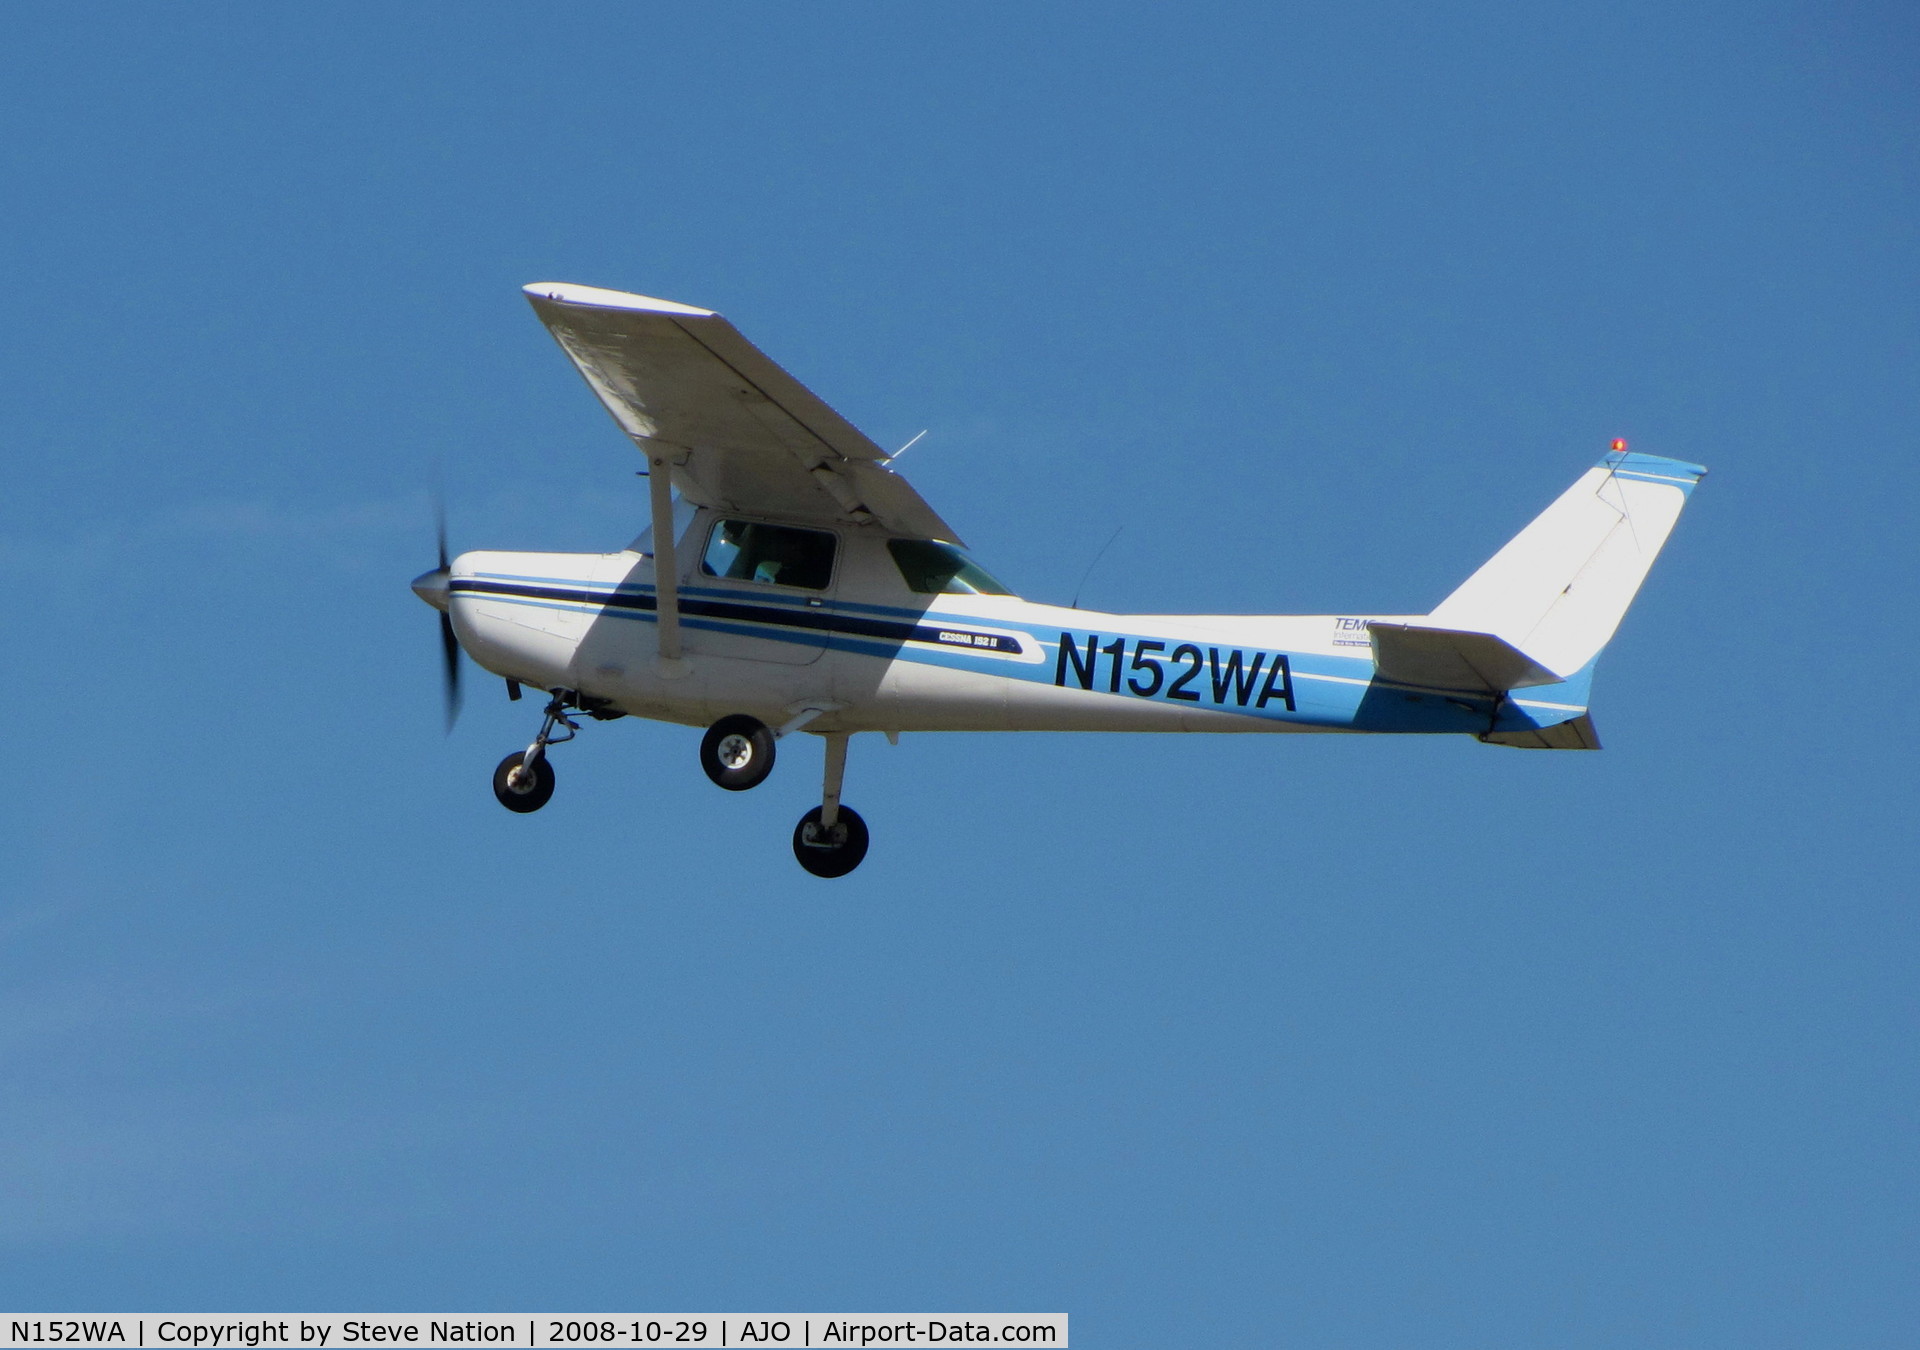 N152WA, 1979 Cessna 152 C/N 15283845, TEMCO International flying school 1979 Cessna 152 climbs out @ 